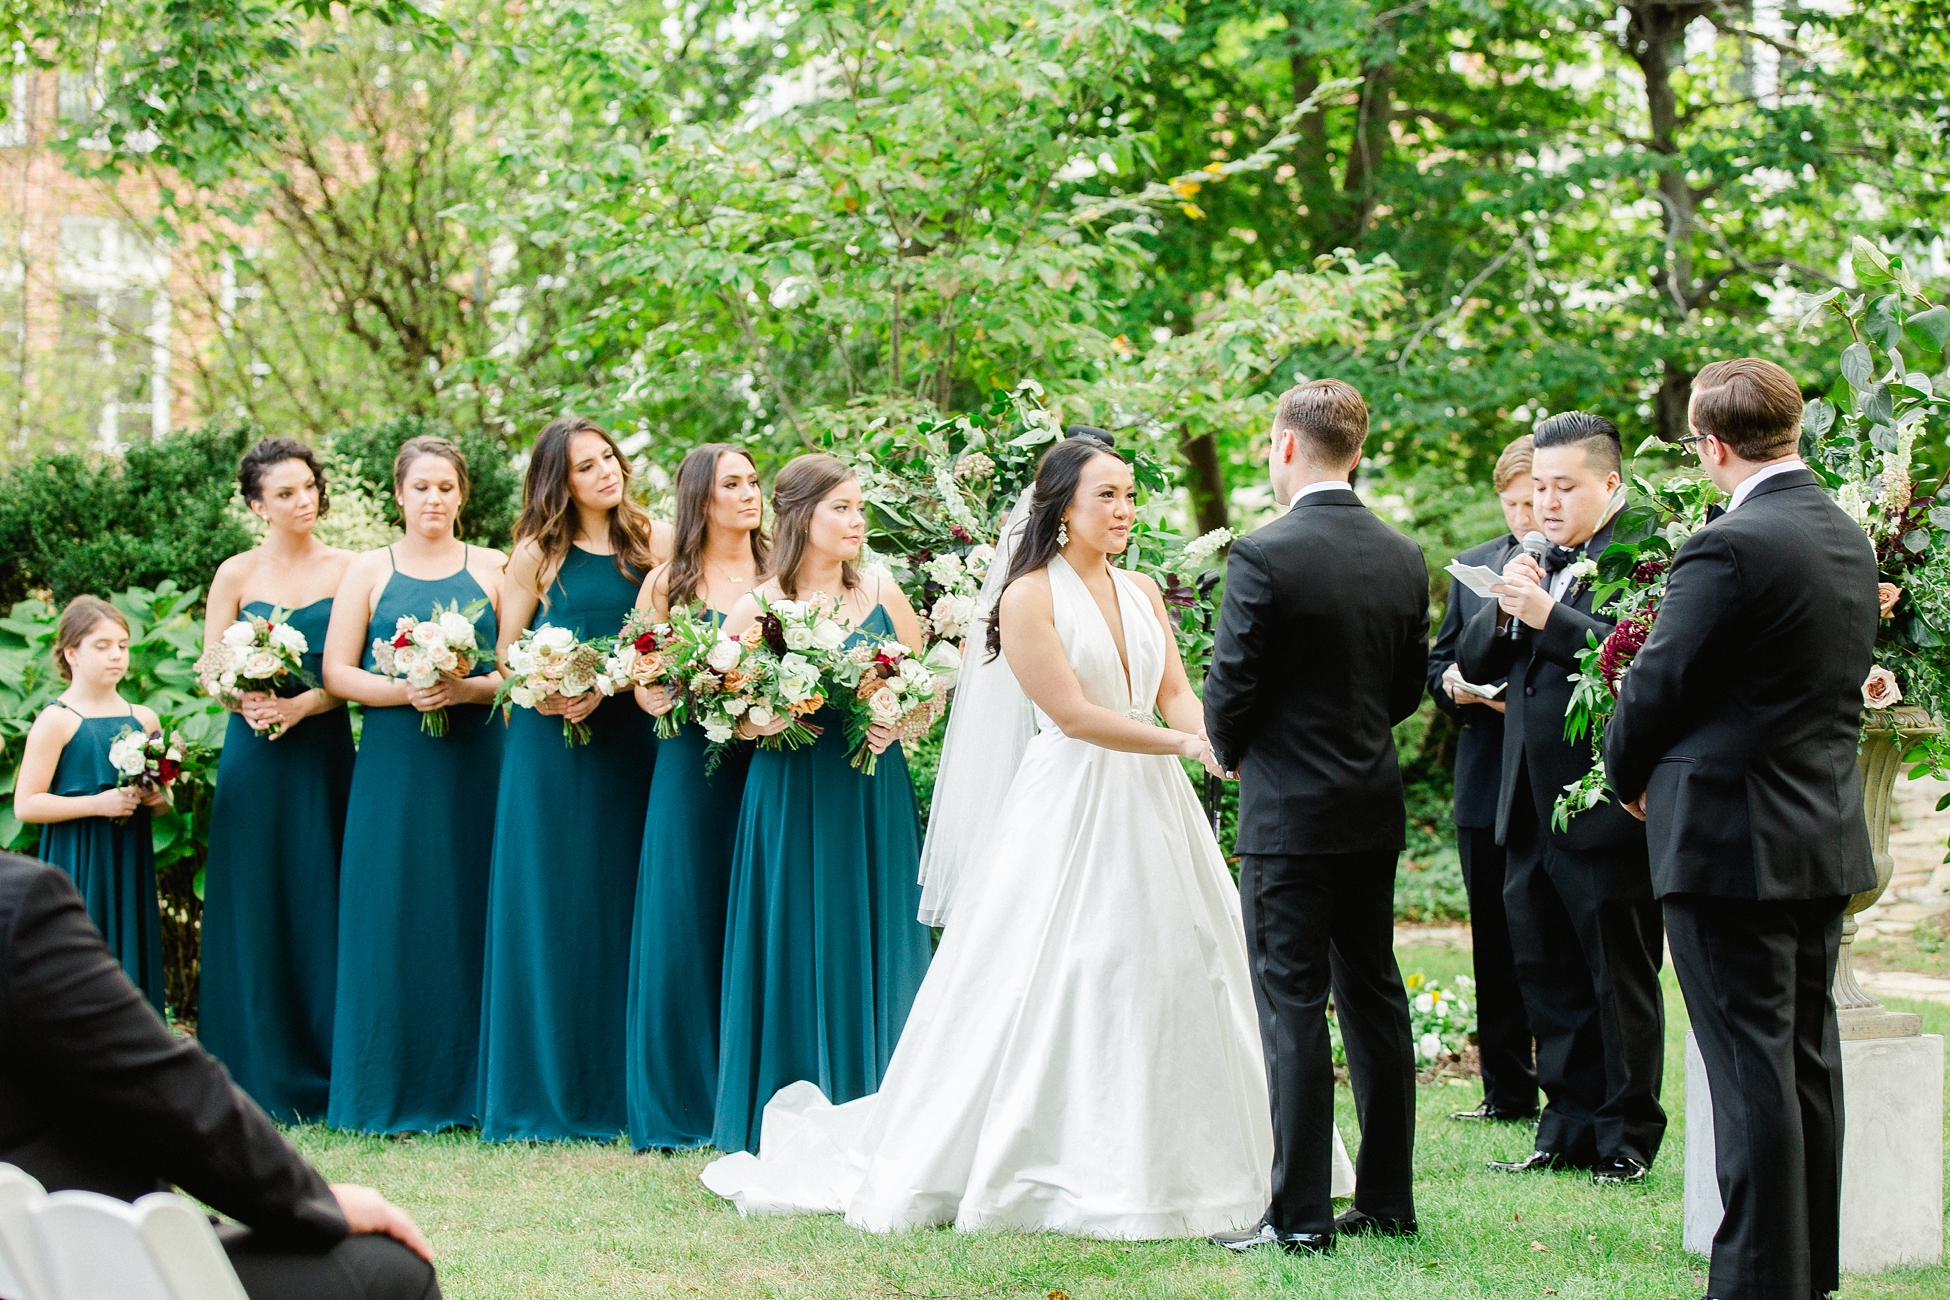 Meridian House DC Wedding | © Ailyn La Torre Photography 2018